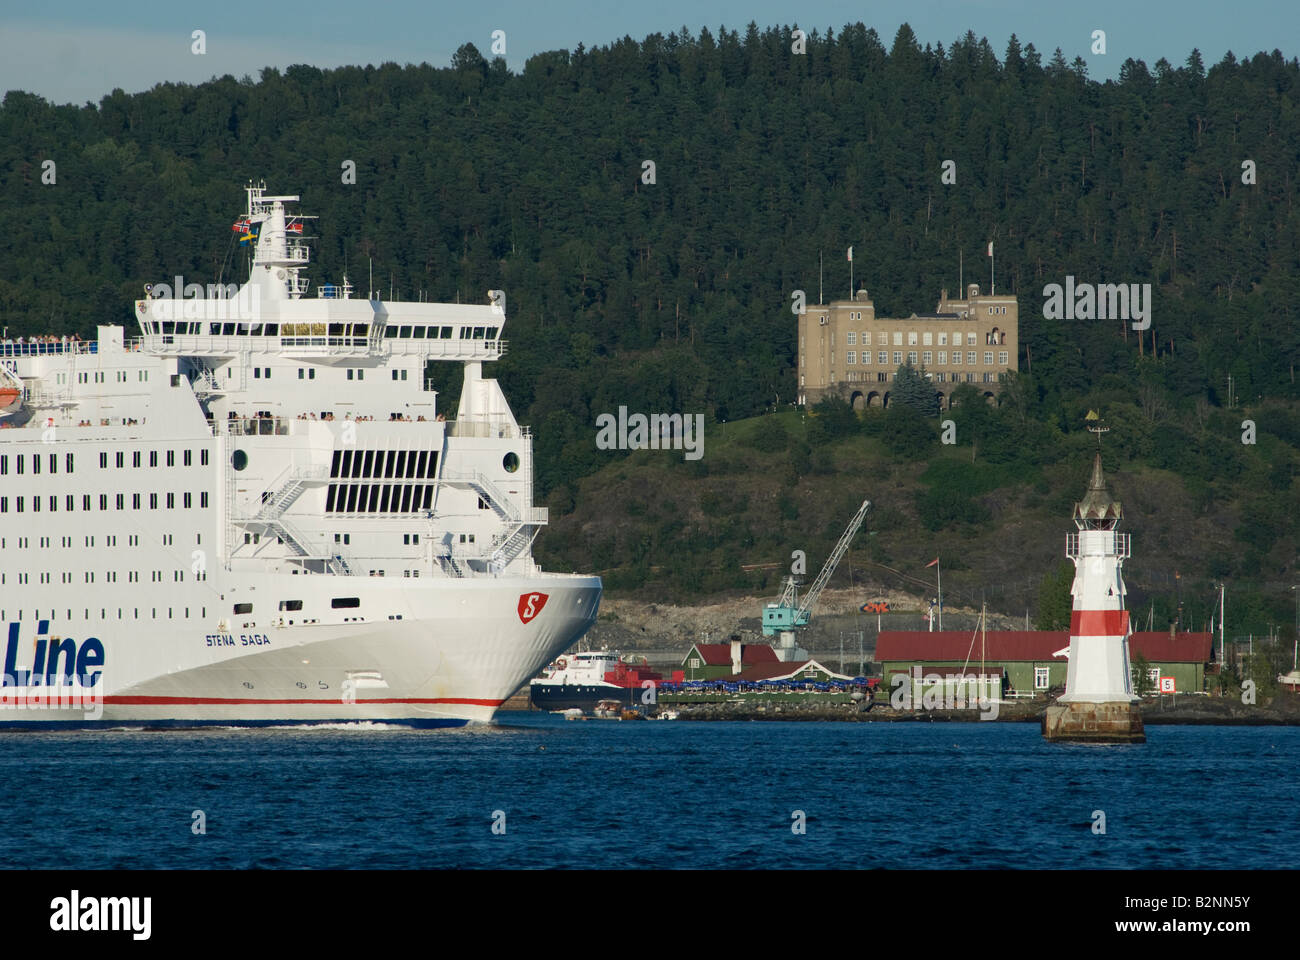 The Swedish car ferry Stena Saga of Stena Line leaving the quay at Vippetangen in Oslo Stock Photo